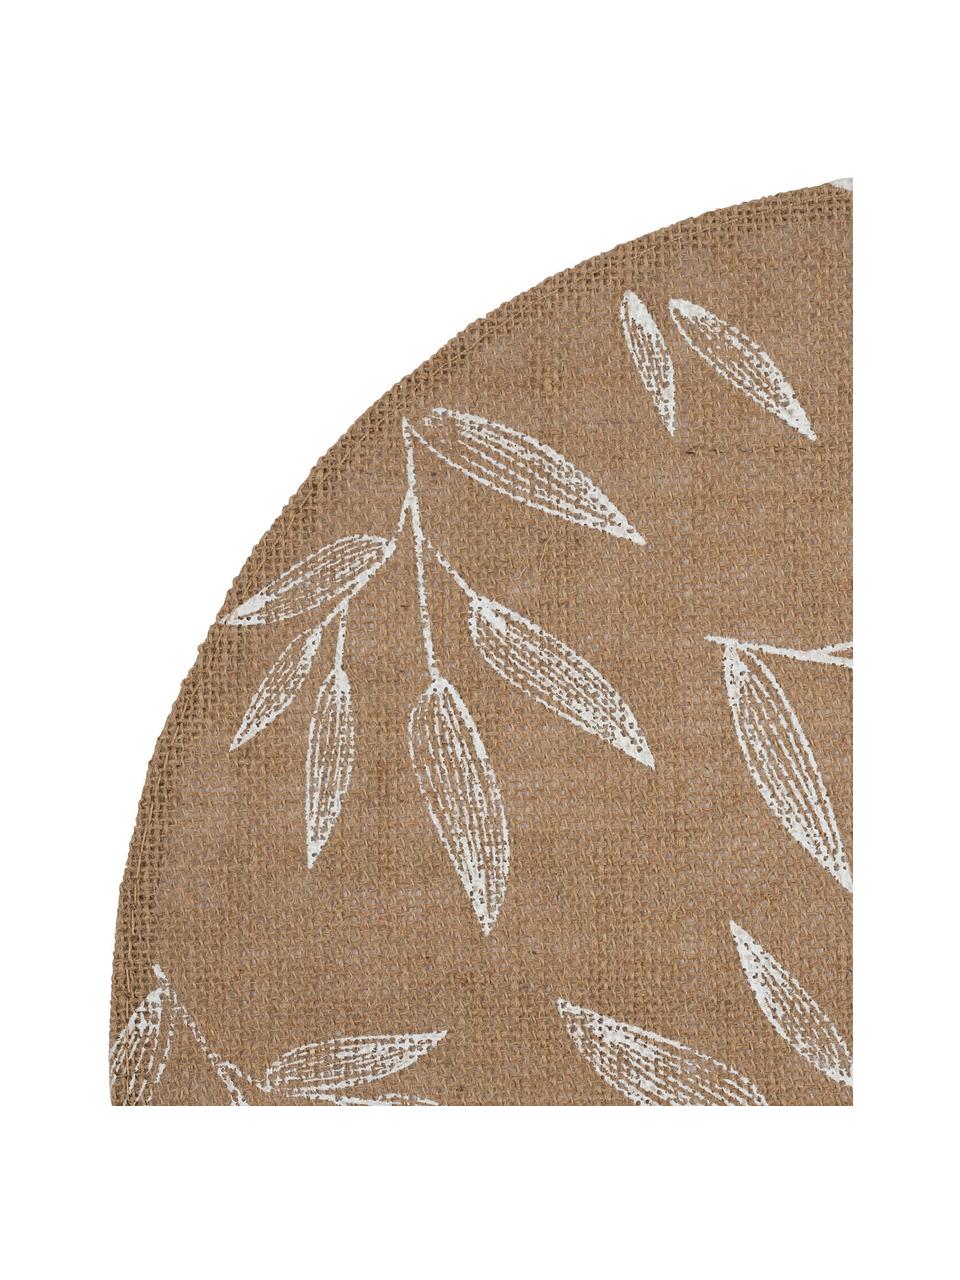 Tovaglietta americana in juta con motivo foglie Pep 2 pz, Juta, Beige, bianco, Larg. 40 x Lung. 40 cm